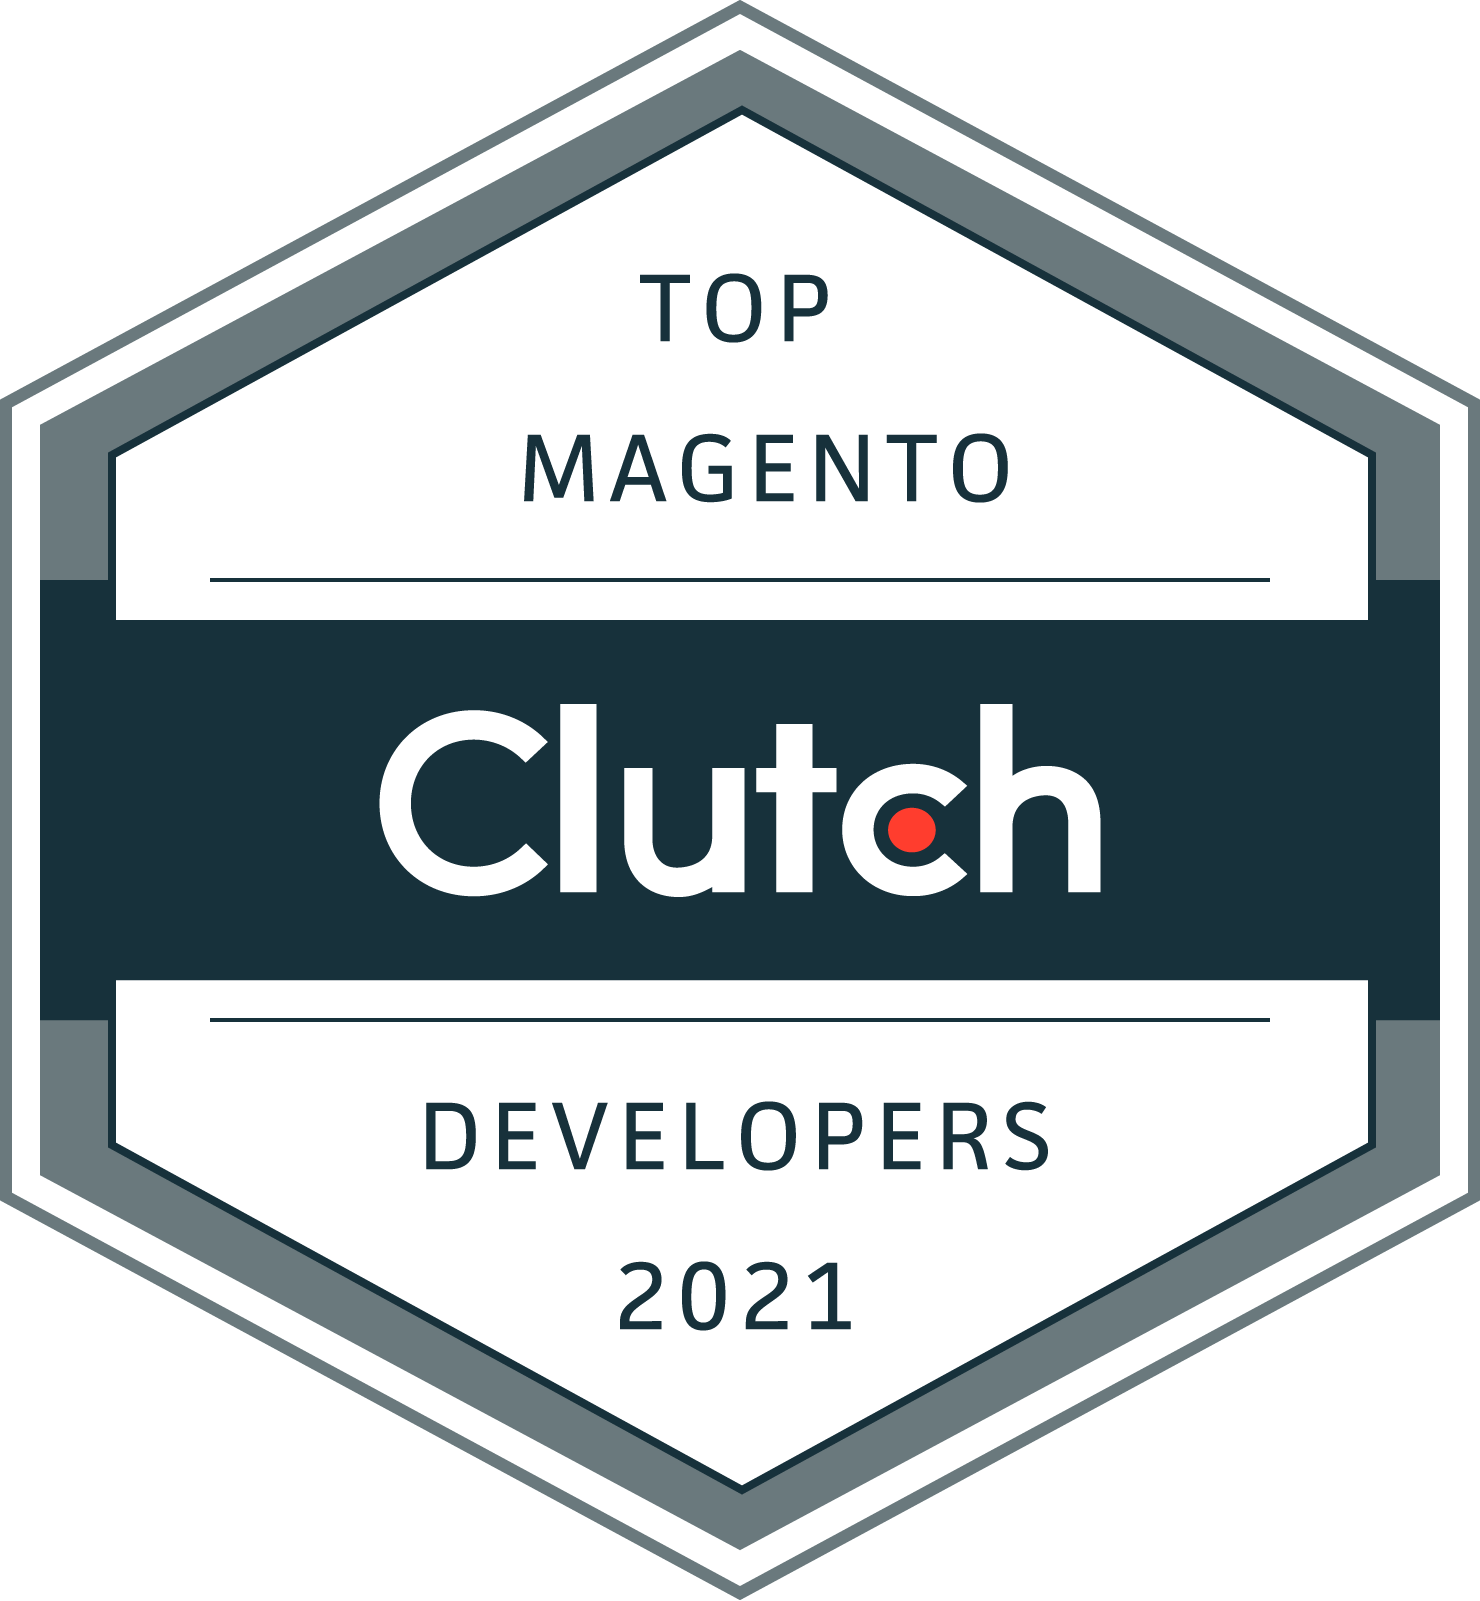 Top Certified Magento Developers